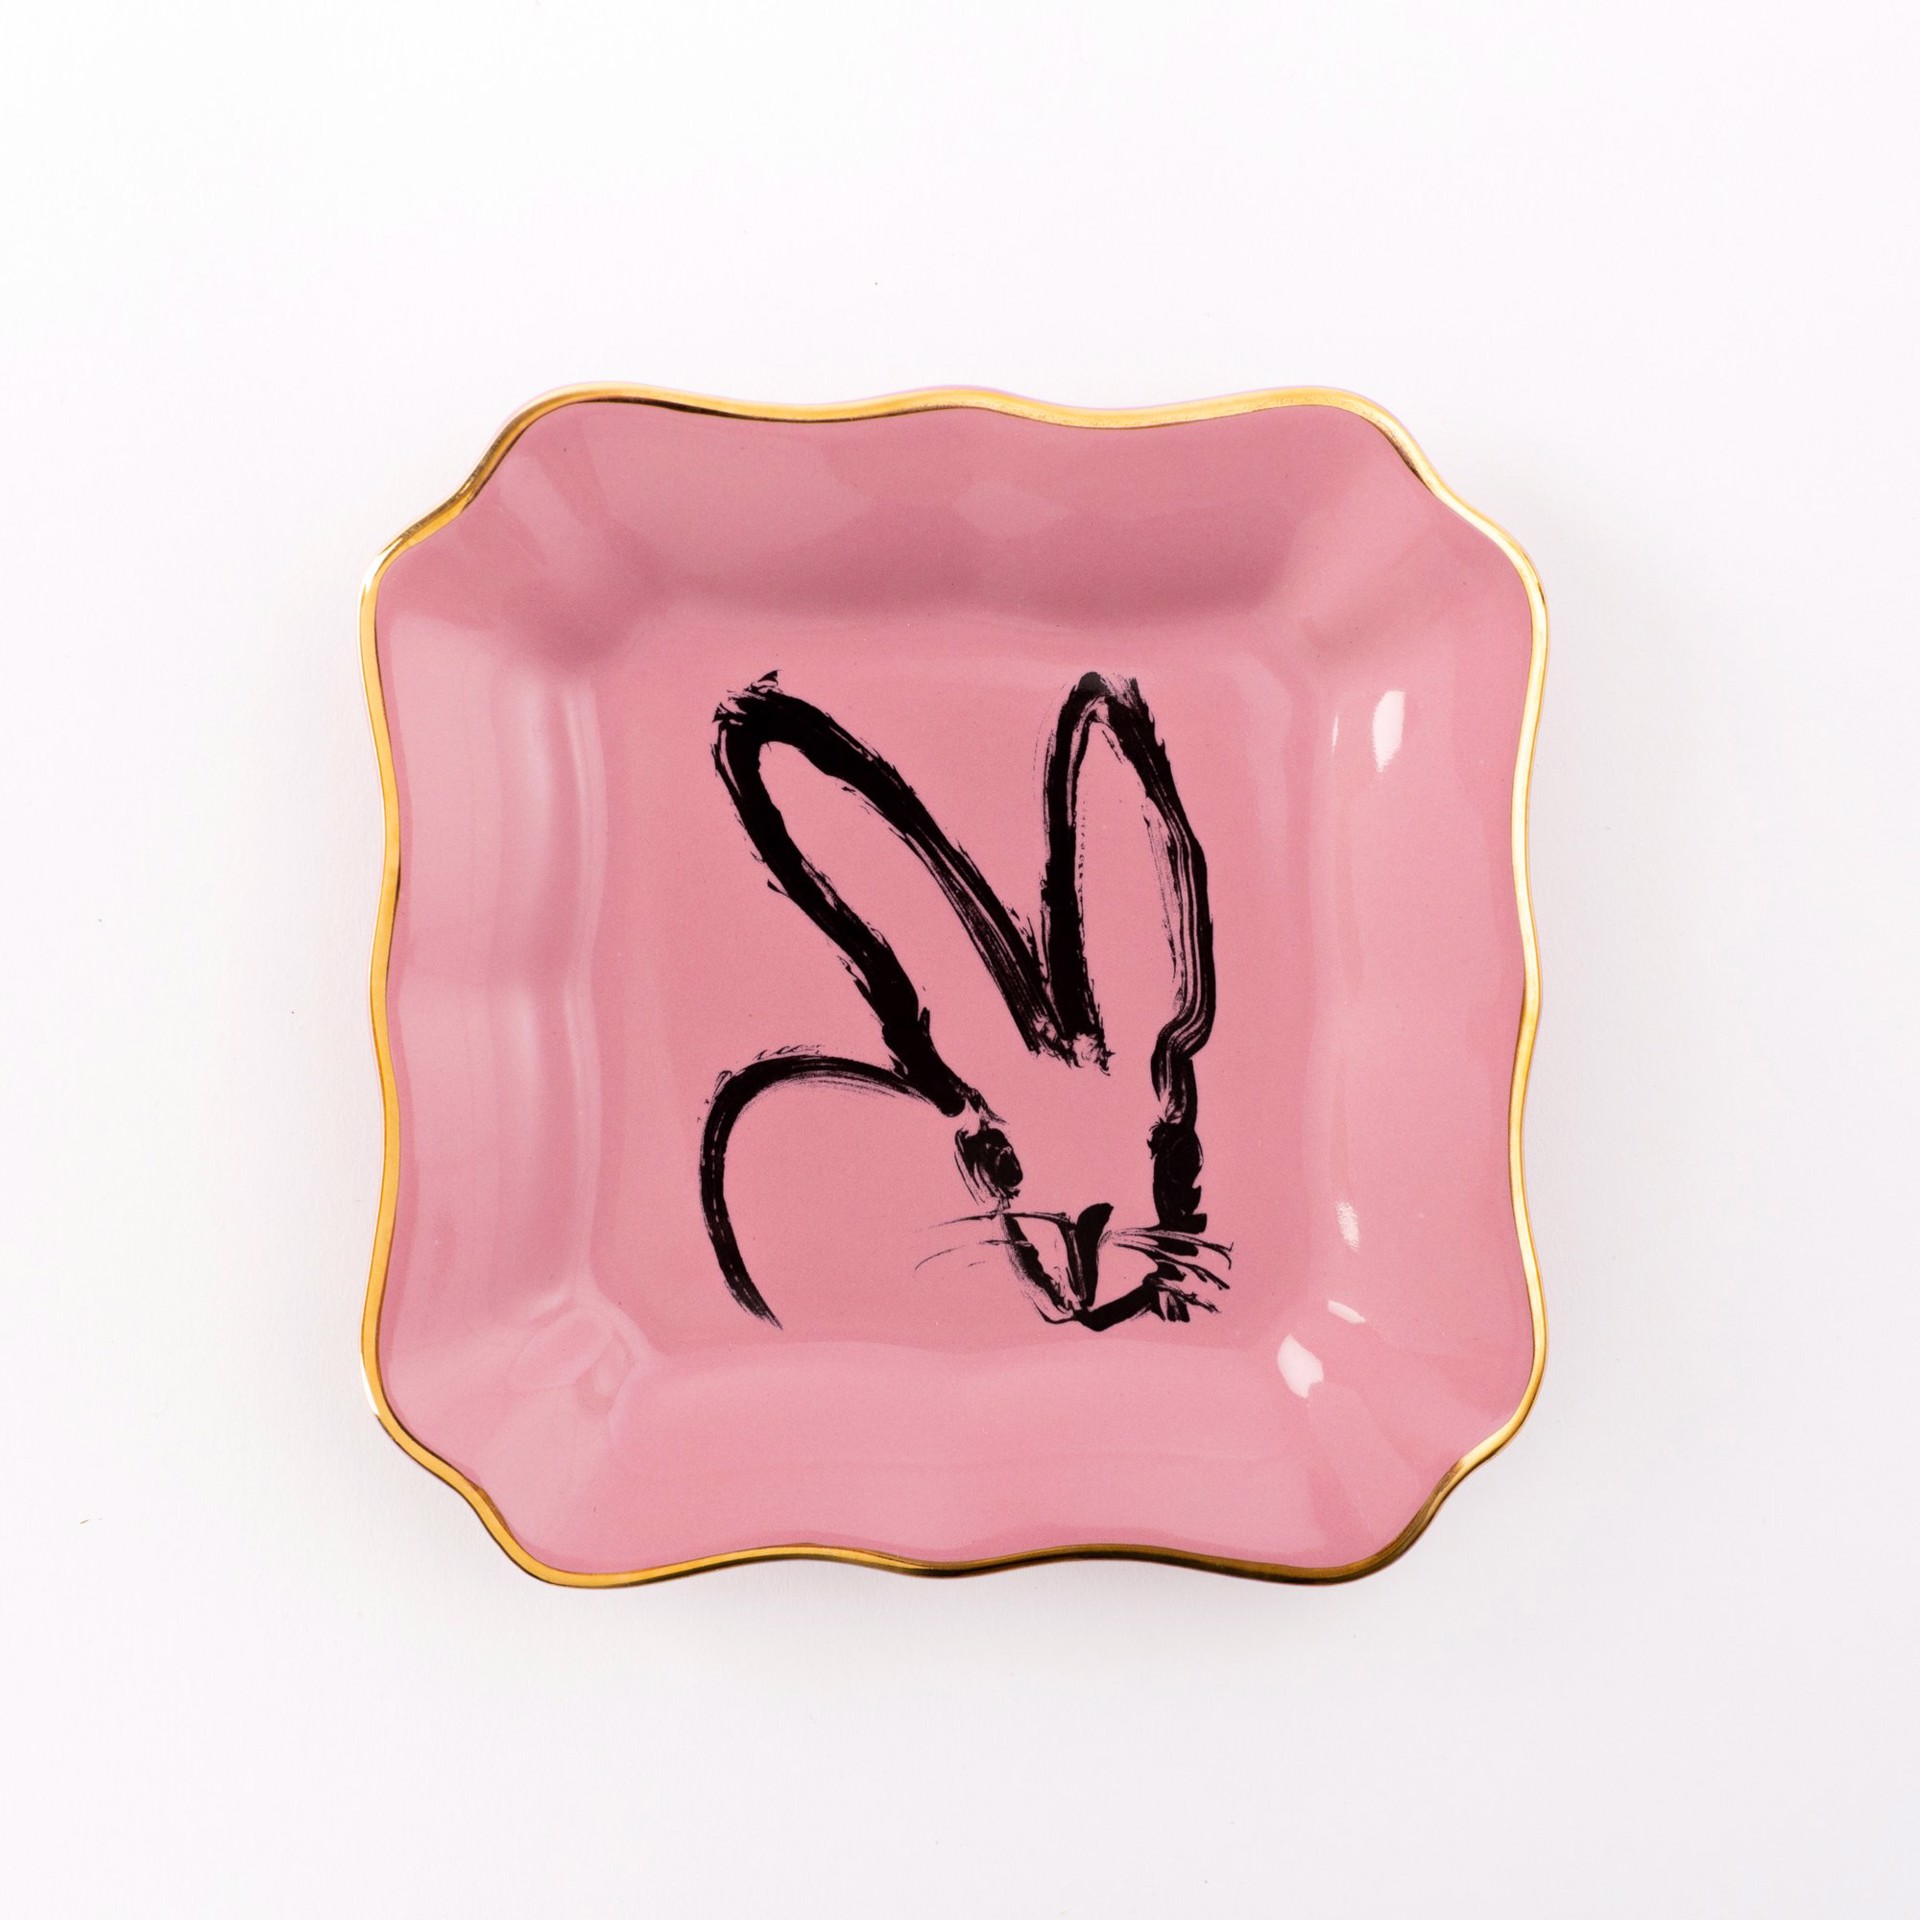 Bunny Portrait Plate - Pink by Hunt Slonem (Hop Up Shop)